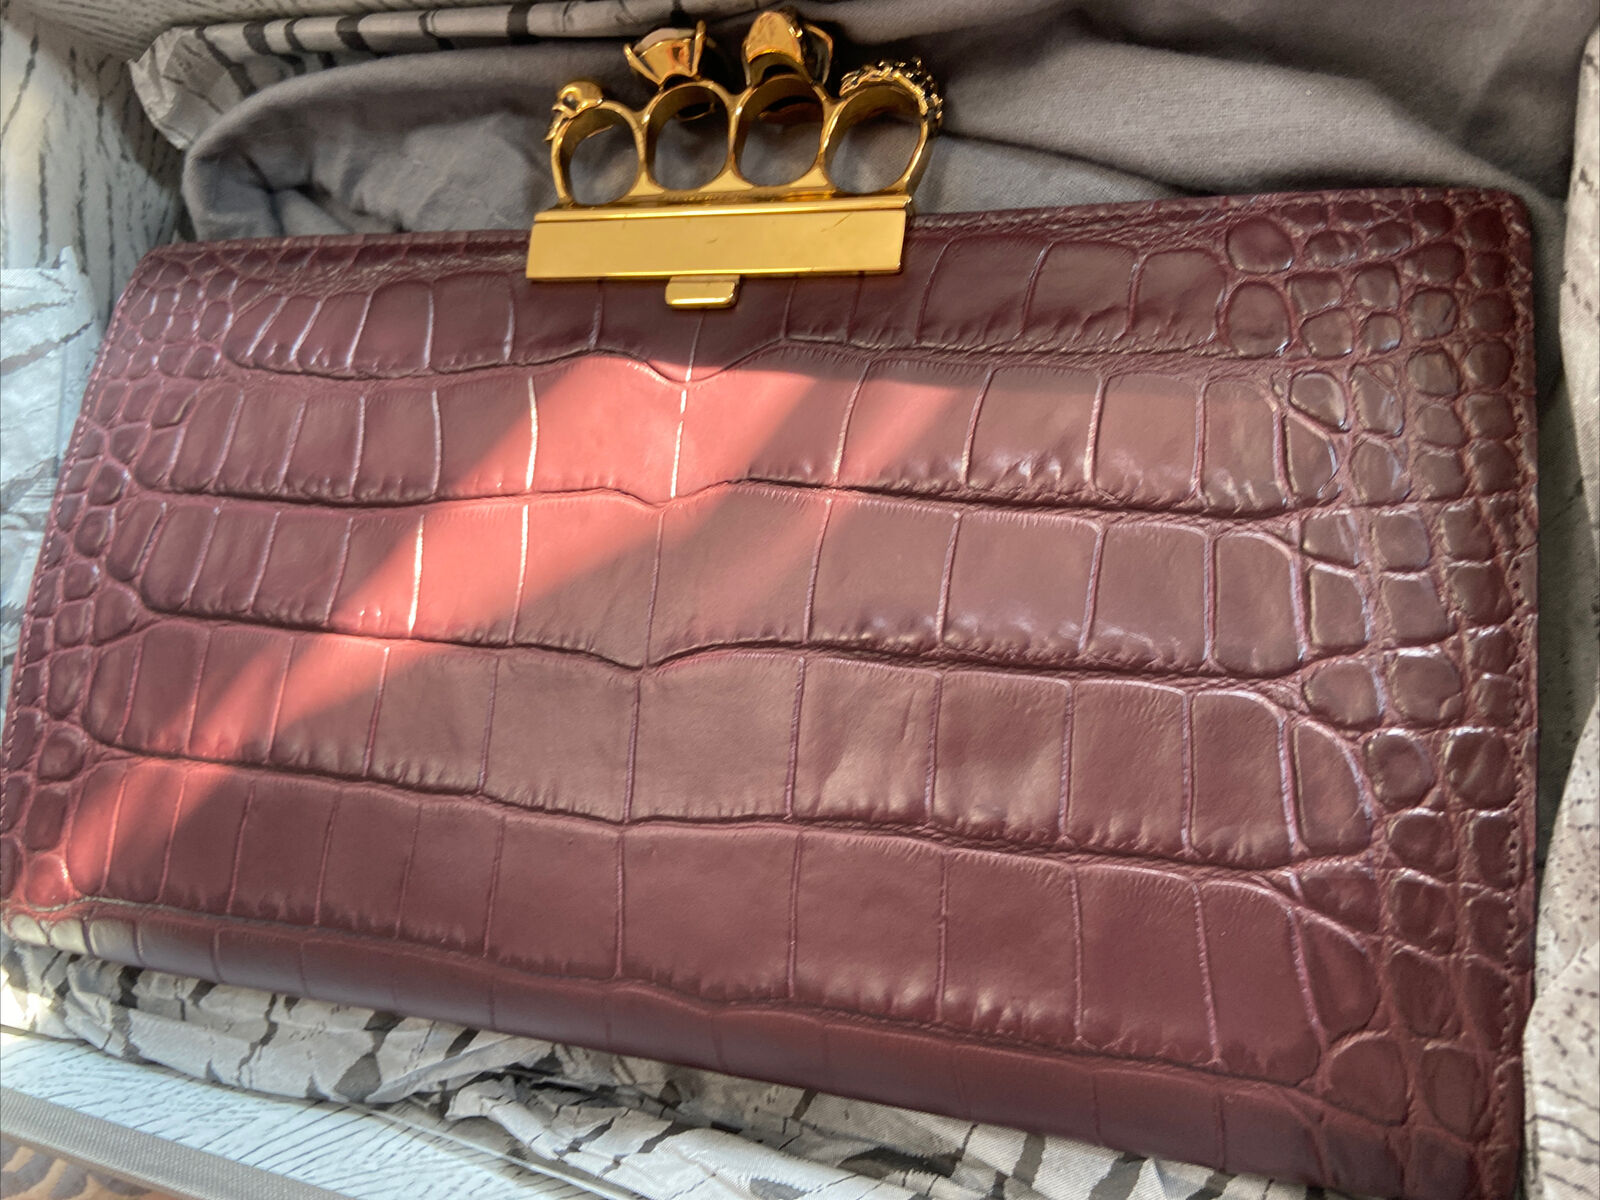 Alexander McQueen Four Ring embossed clutch bag was£1695 burgundy